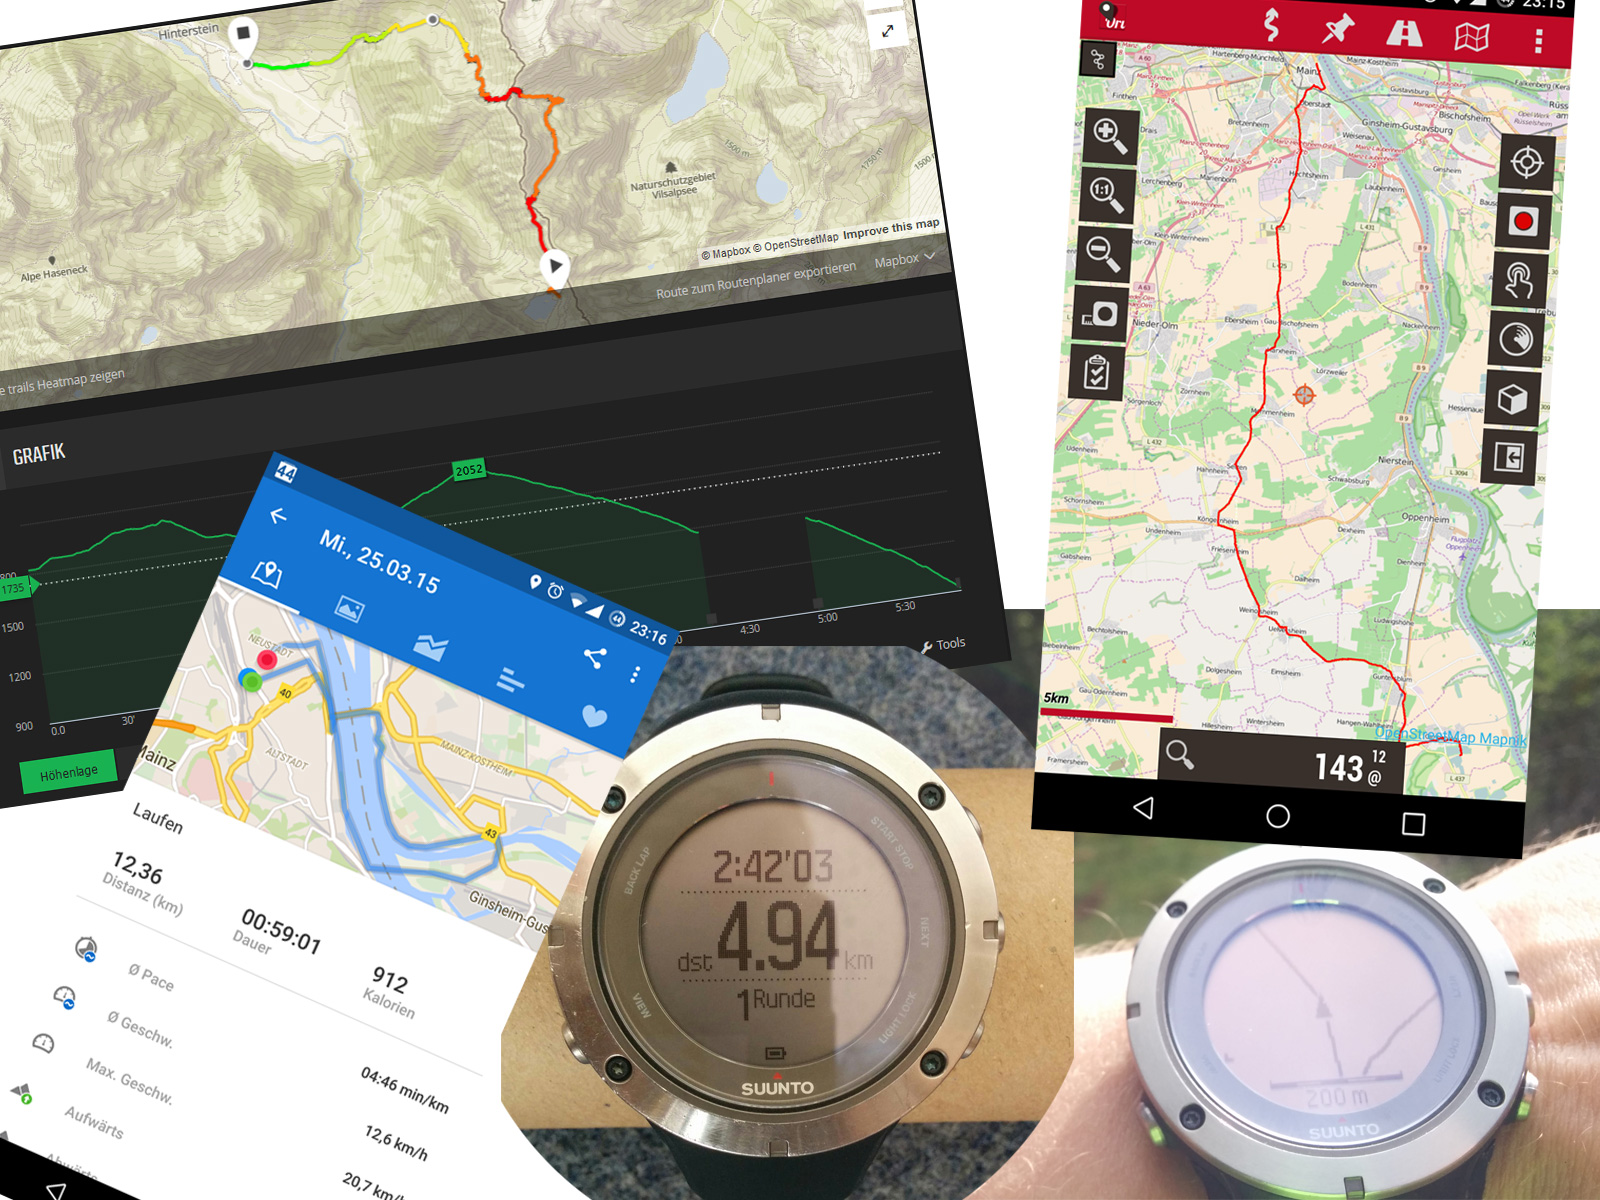 GPS-Tracking